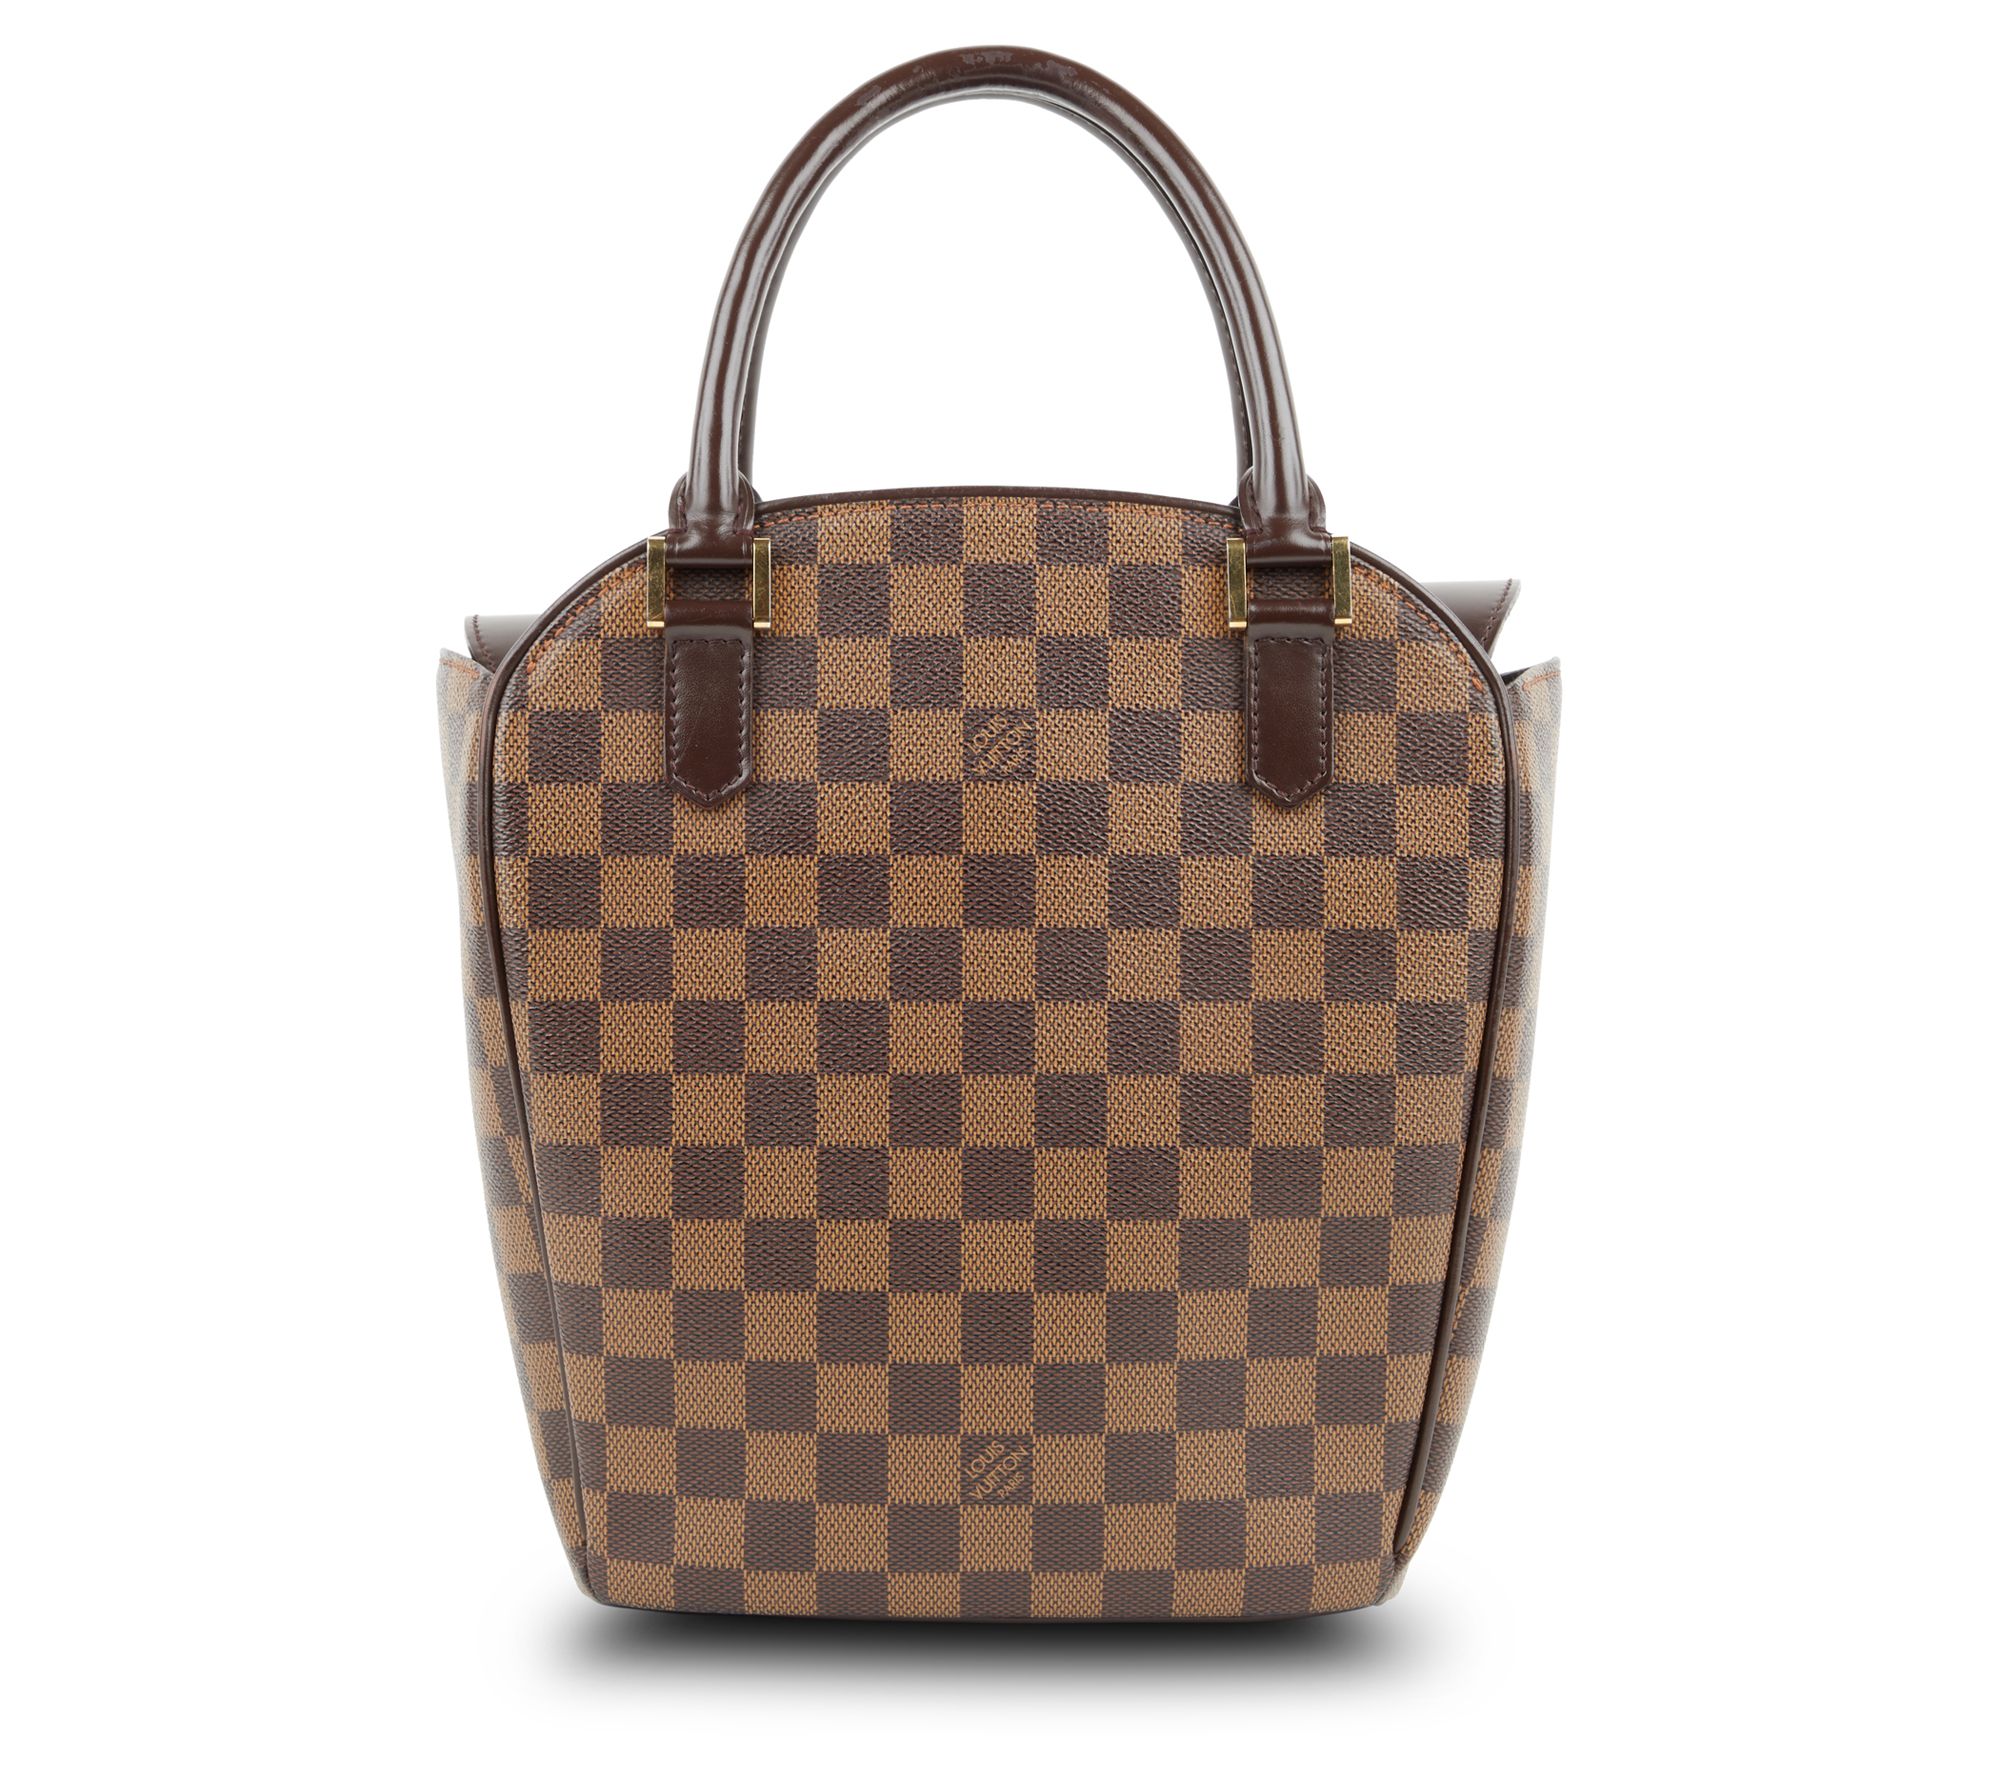 Pin en Louis Vuitton Monogram bag outfits: Alma,Speedy